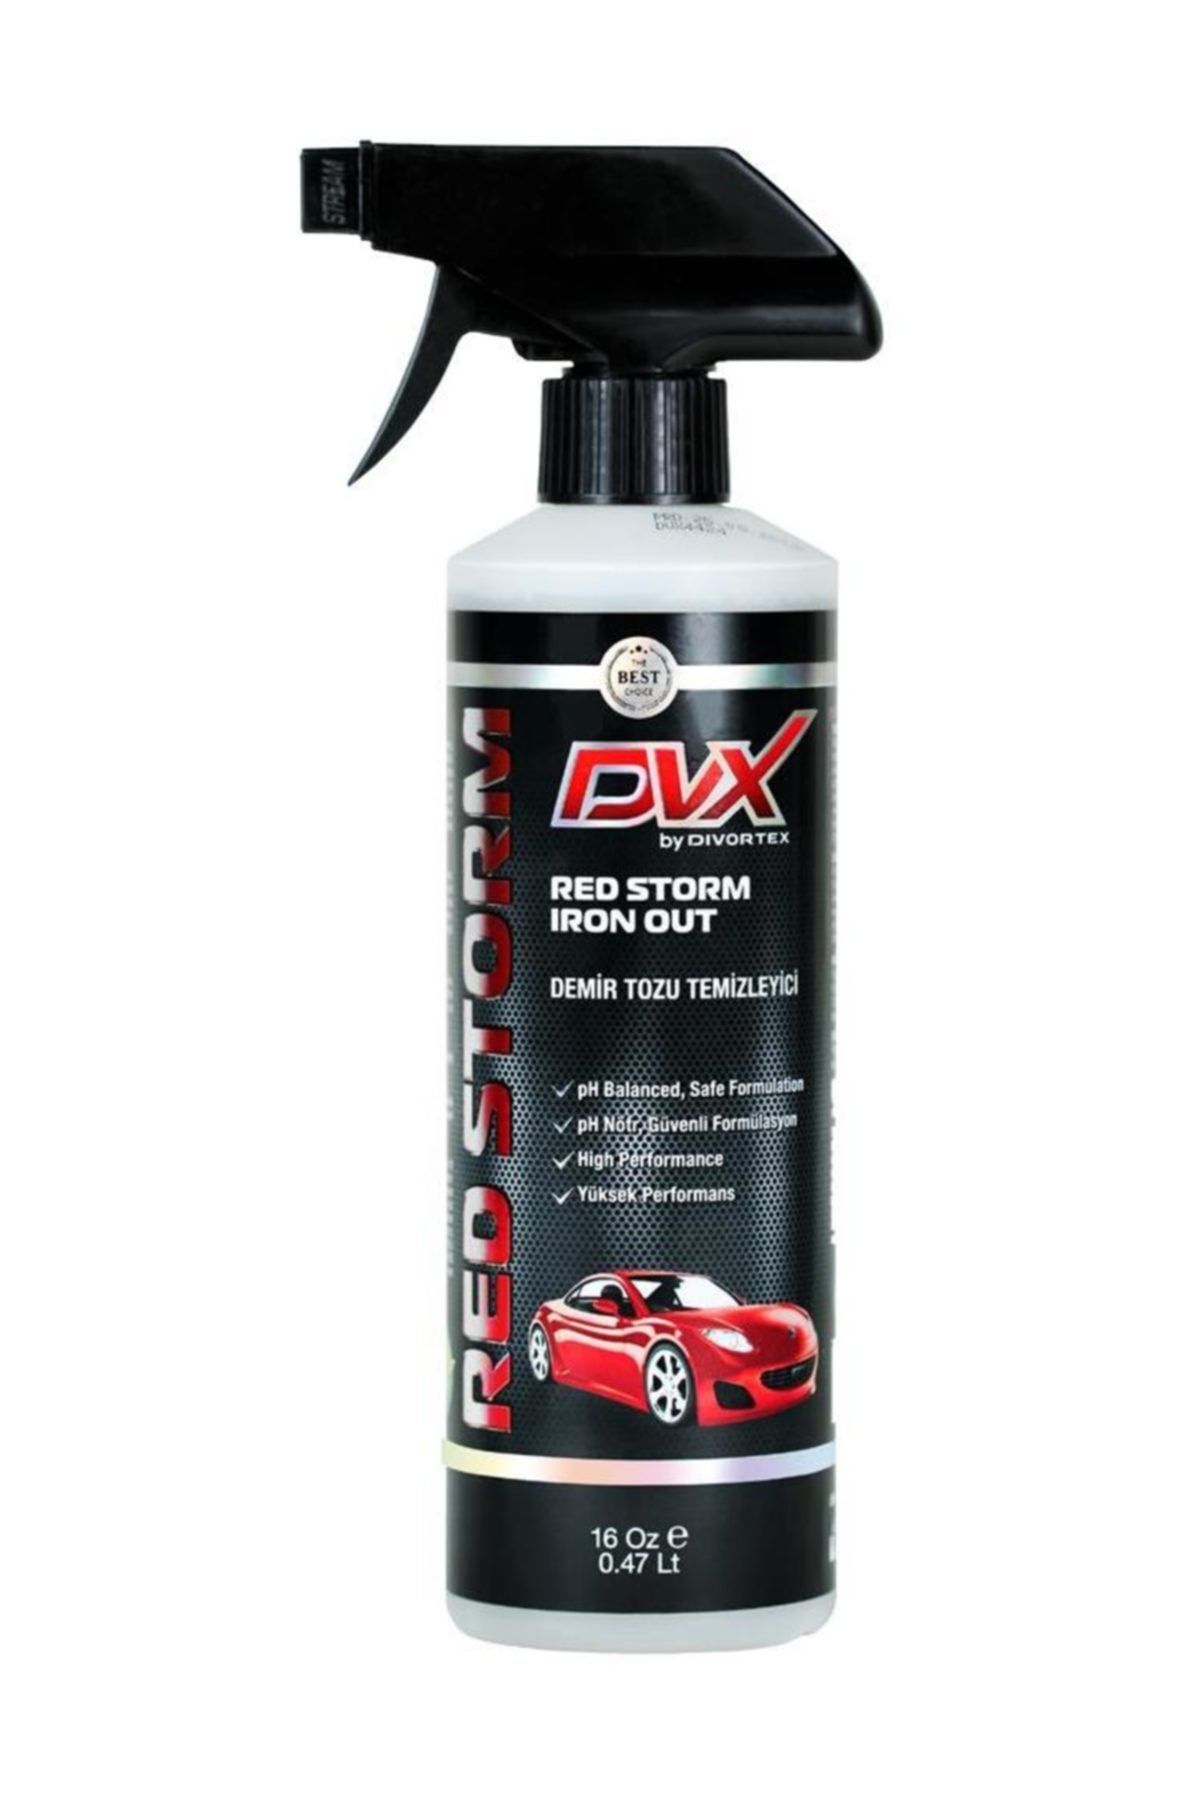 Divortex DVX Red Storm Demir Tozu Temizleyici IRON OUT 16 Oz 473 ml.